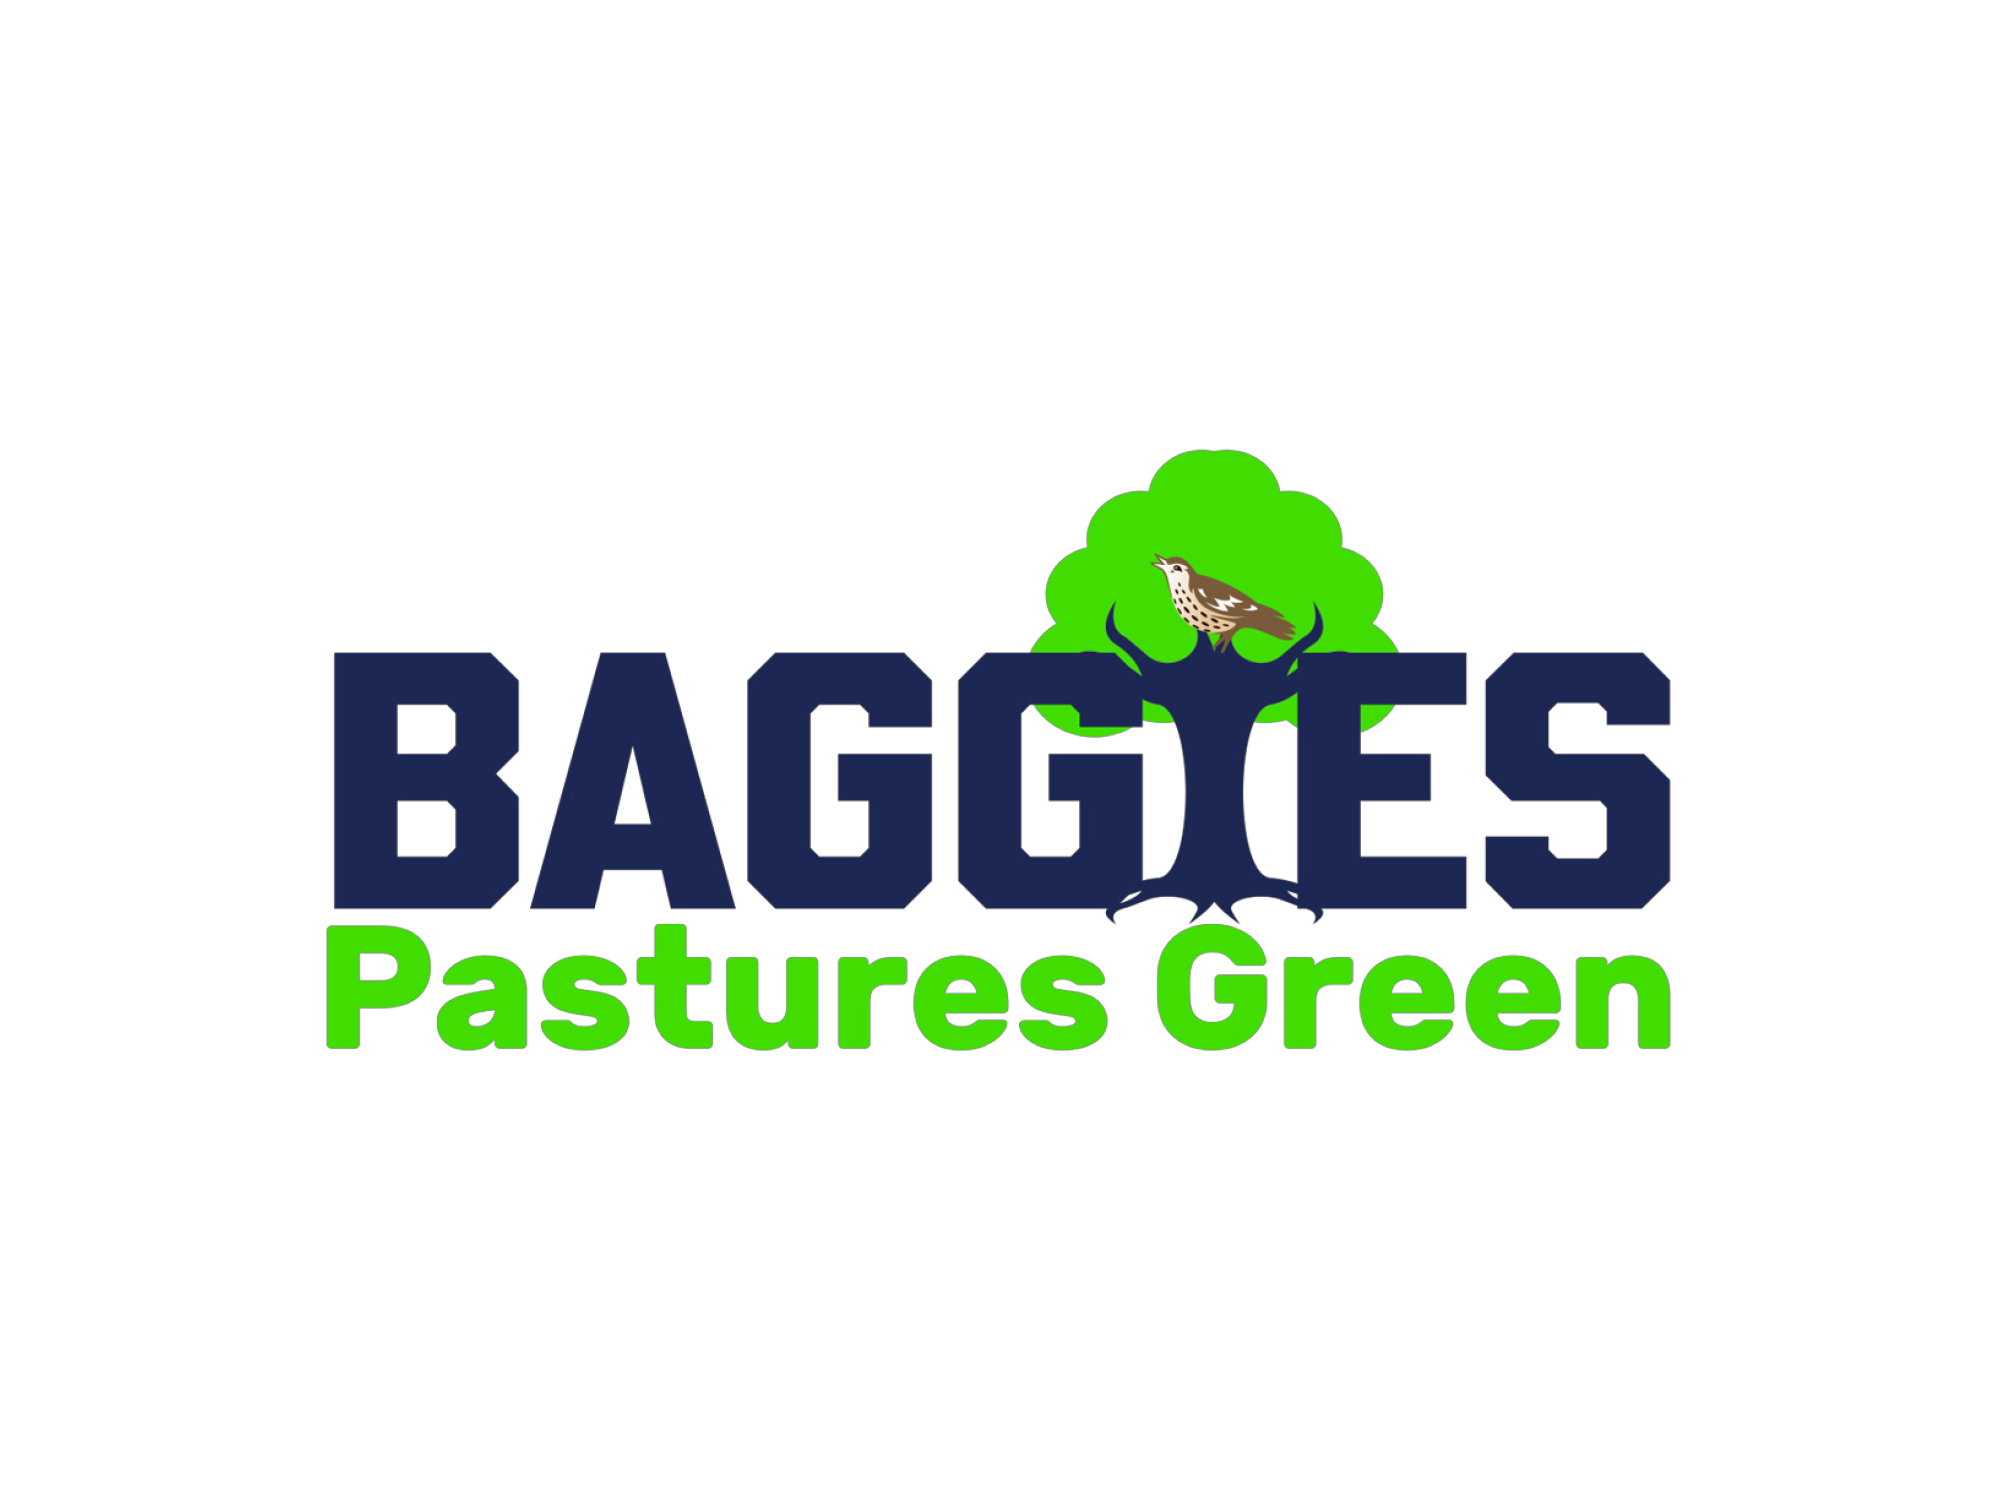 Baggies Pastures Green